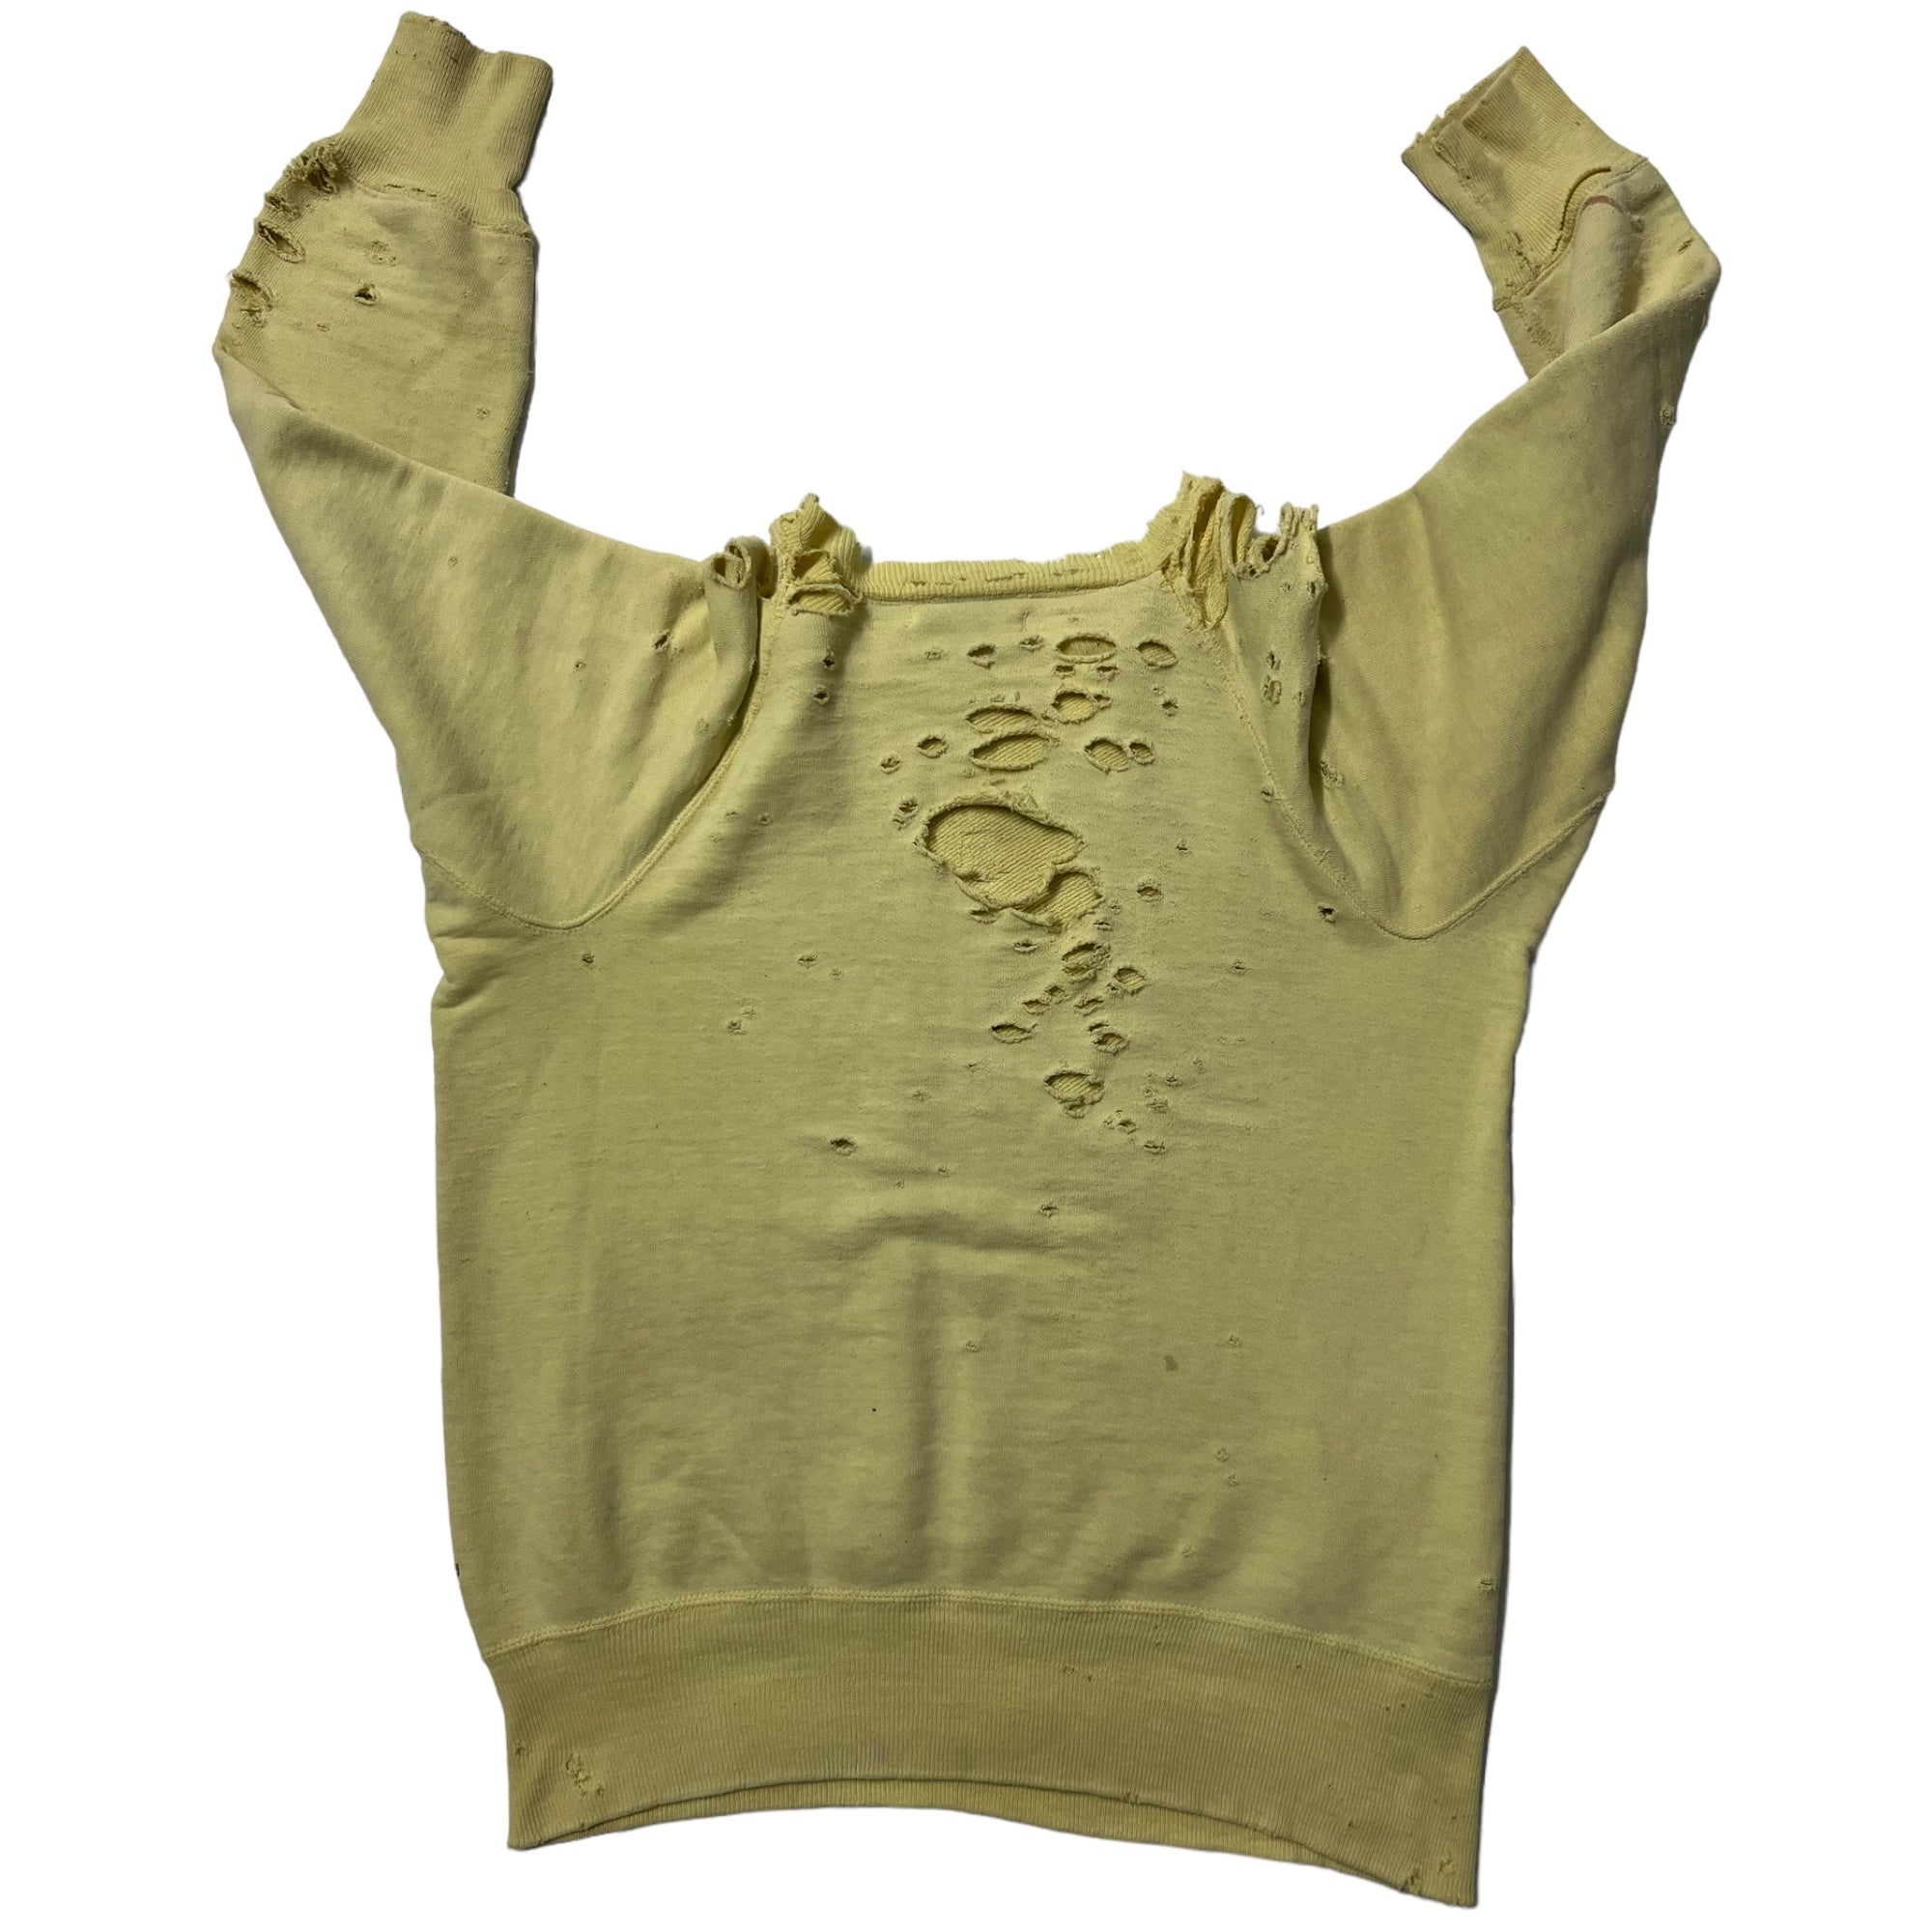 1950s Thrashed Akon Pepshirt Sweatshirt - Faded Butter Yellow - M/L